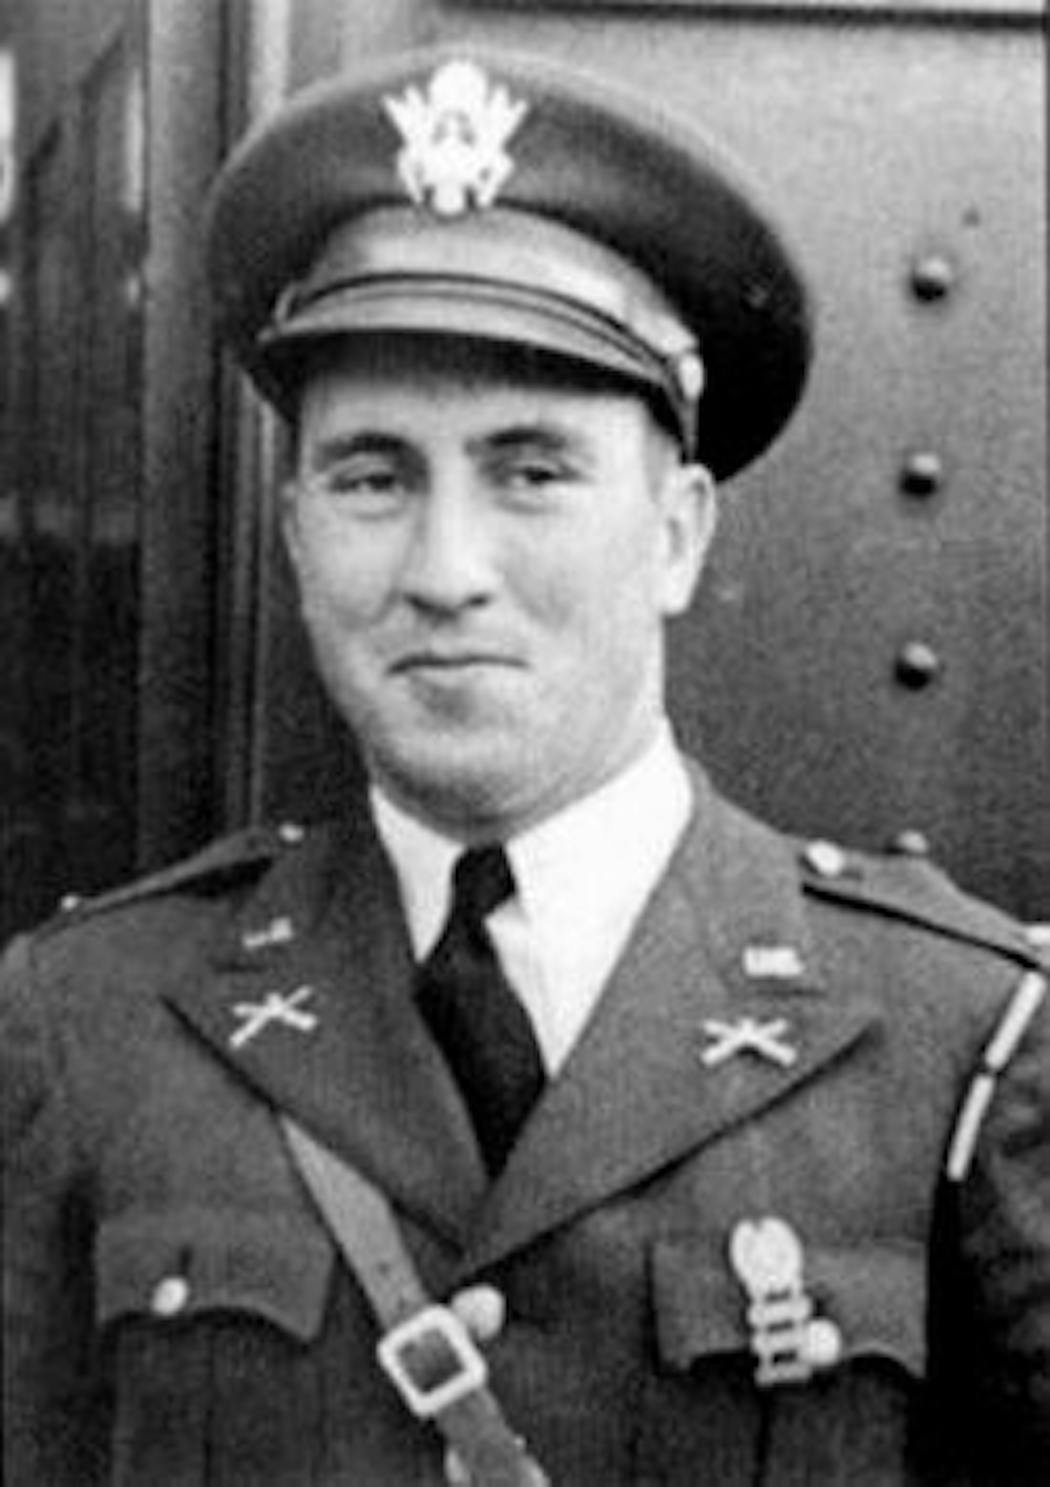 Capt. Willibald Bianchi, U.S. Army